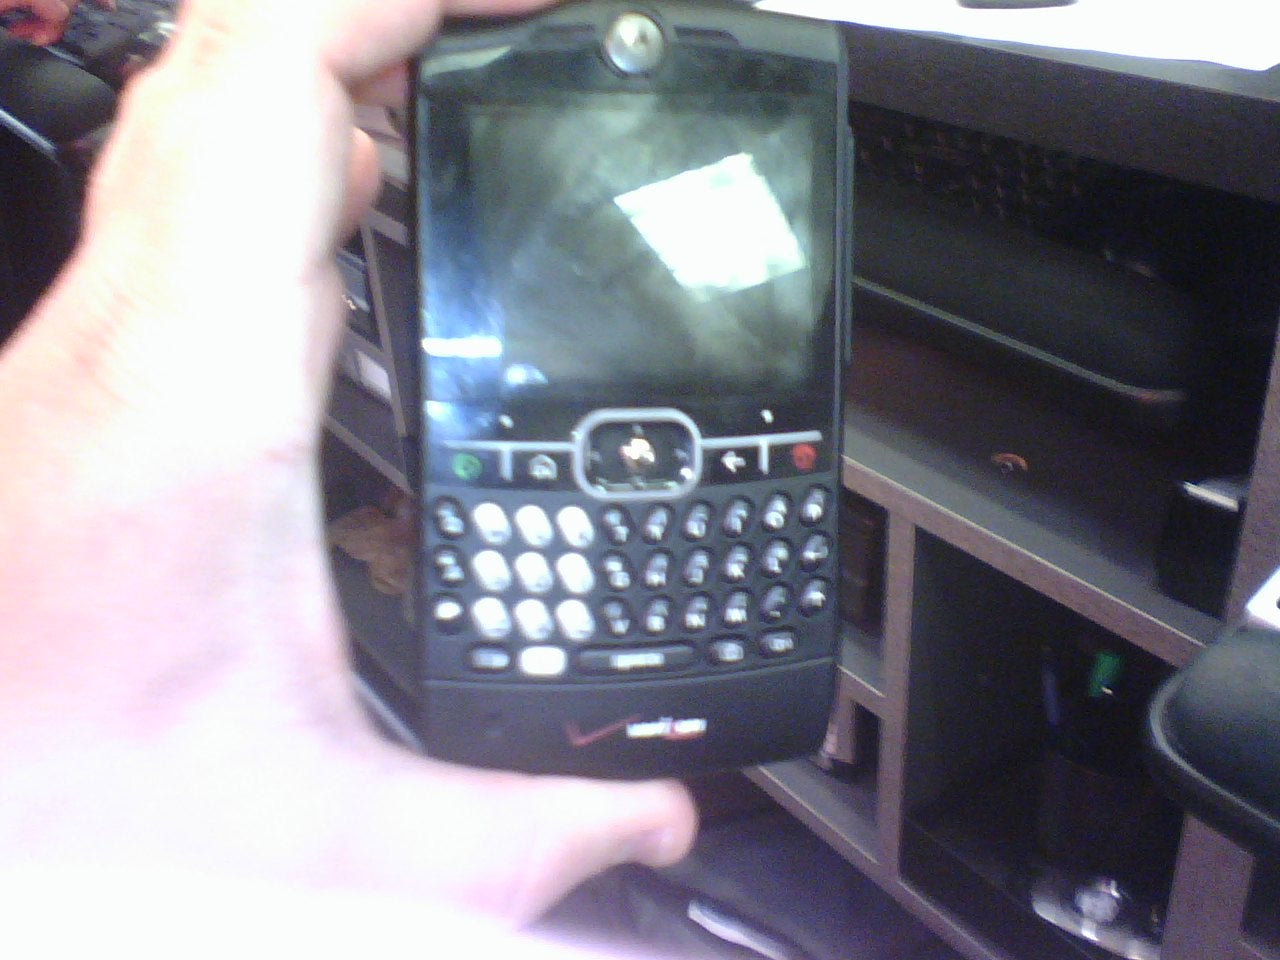 Verizon gets Black Motorola Q, AMPd gets one, too